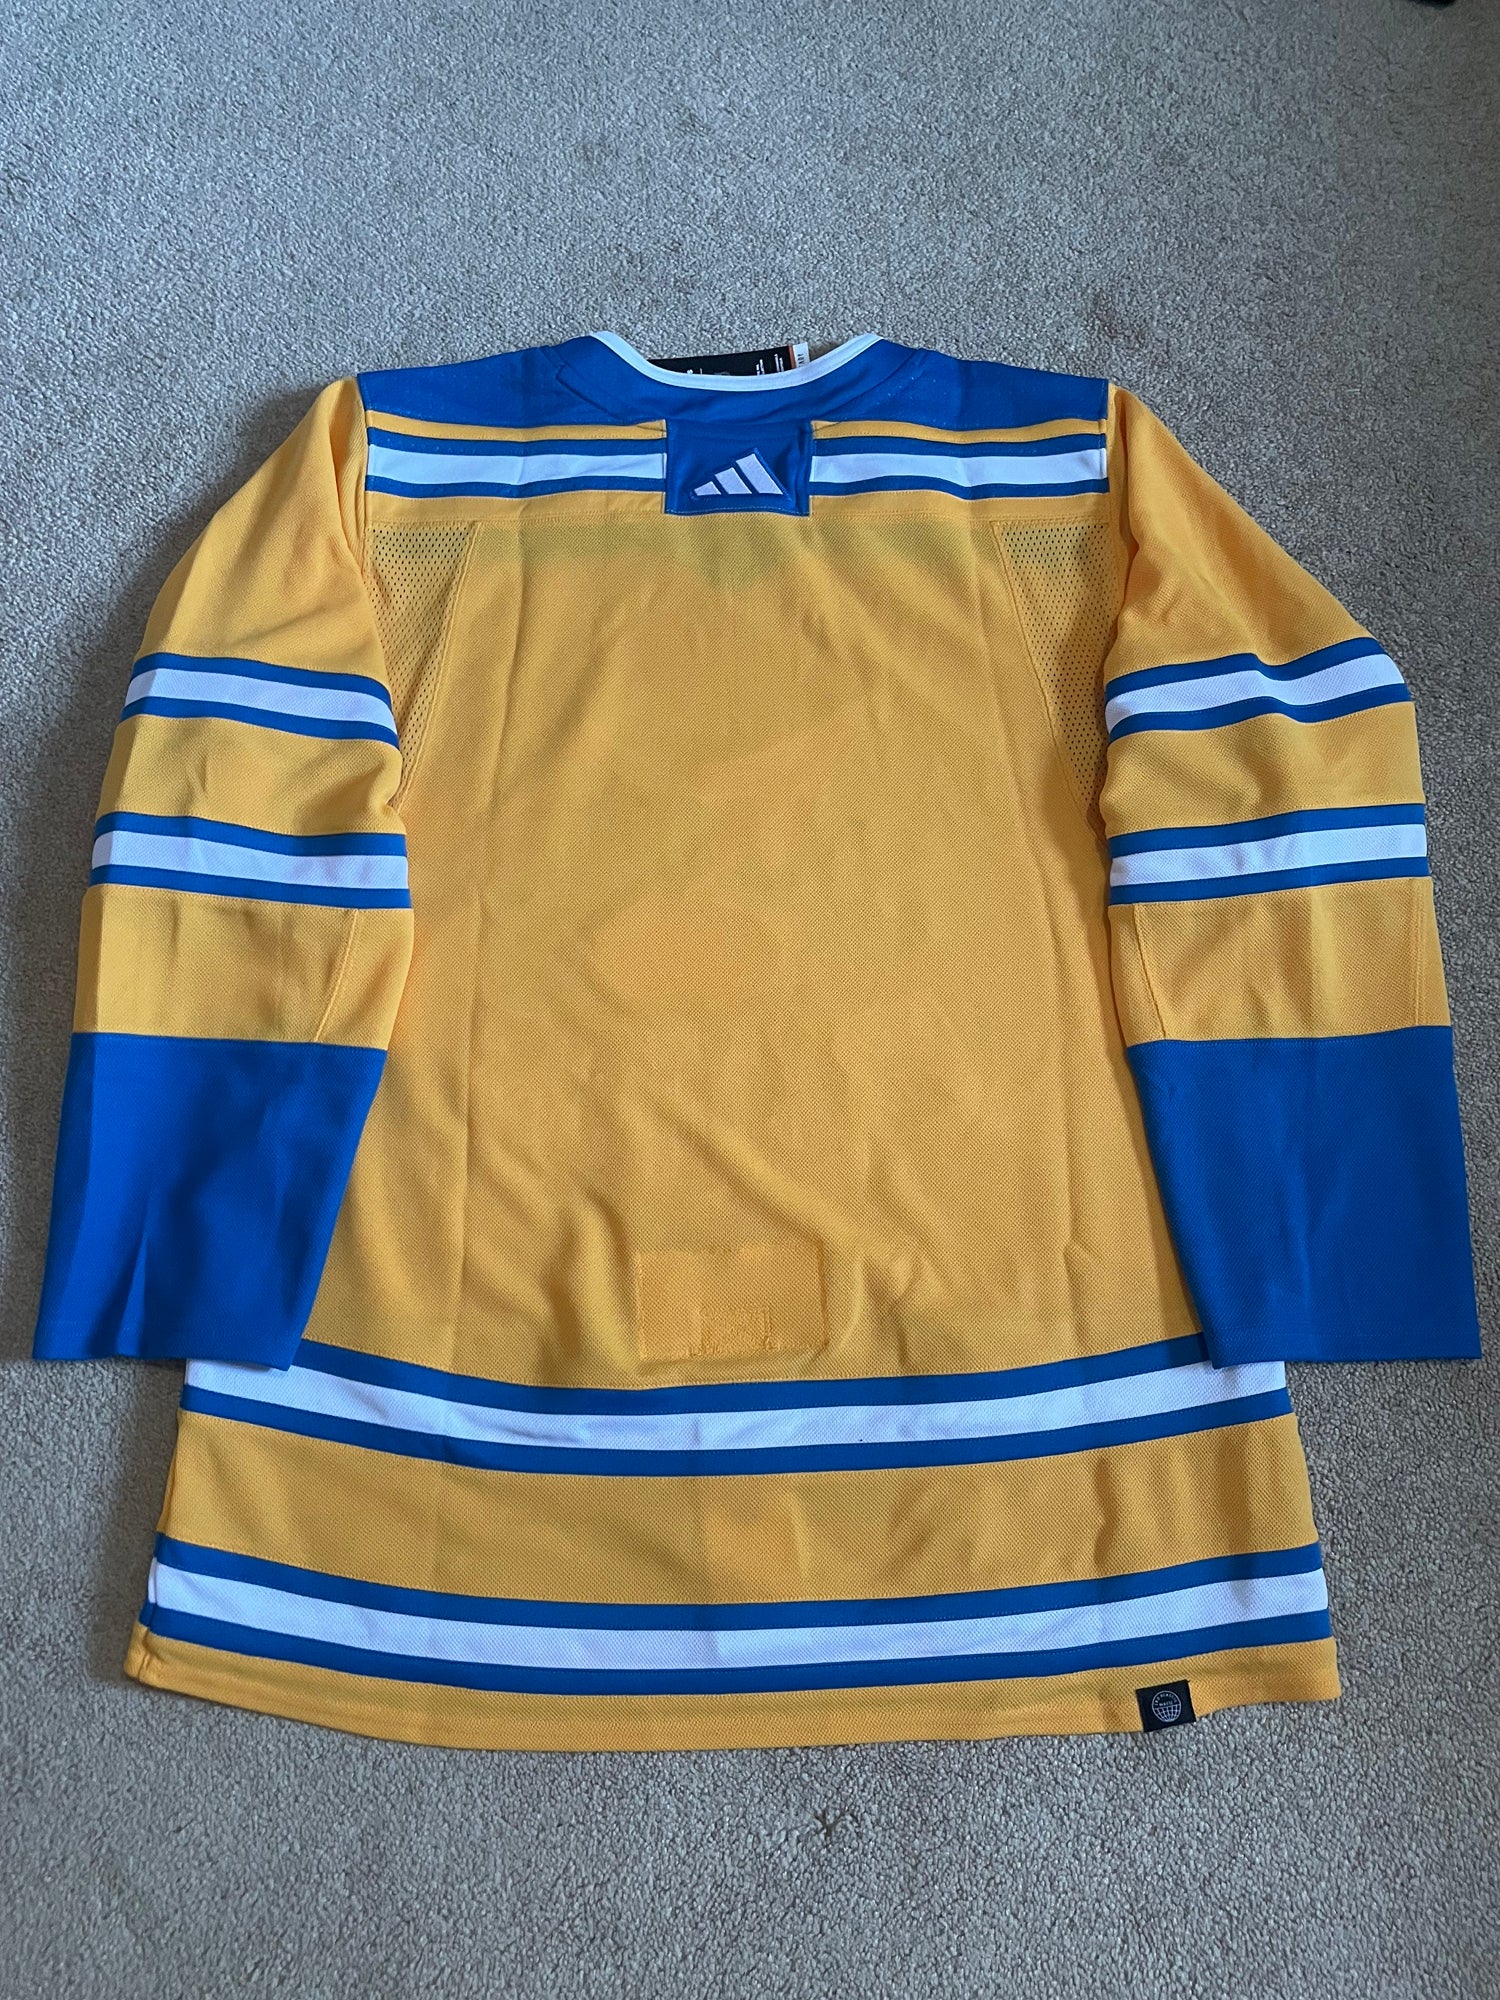 St. Louis Blues Adidas Authentic Retro NHL Hockey Jersey